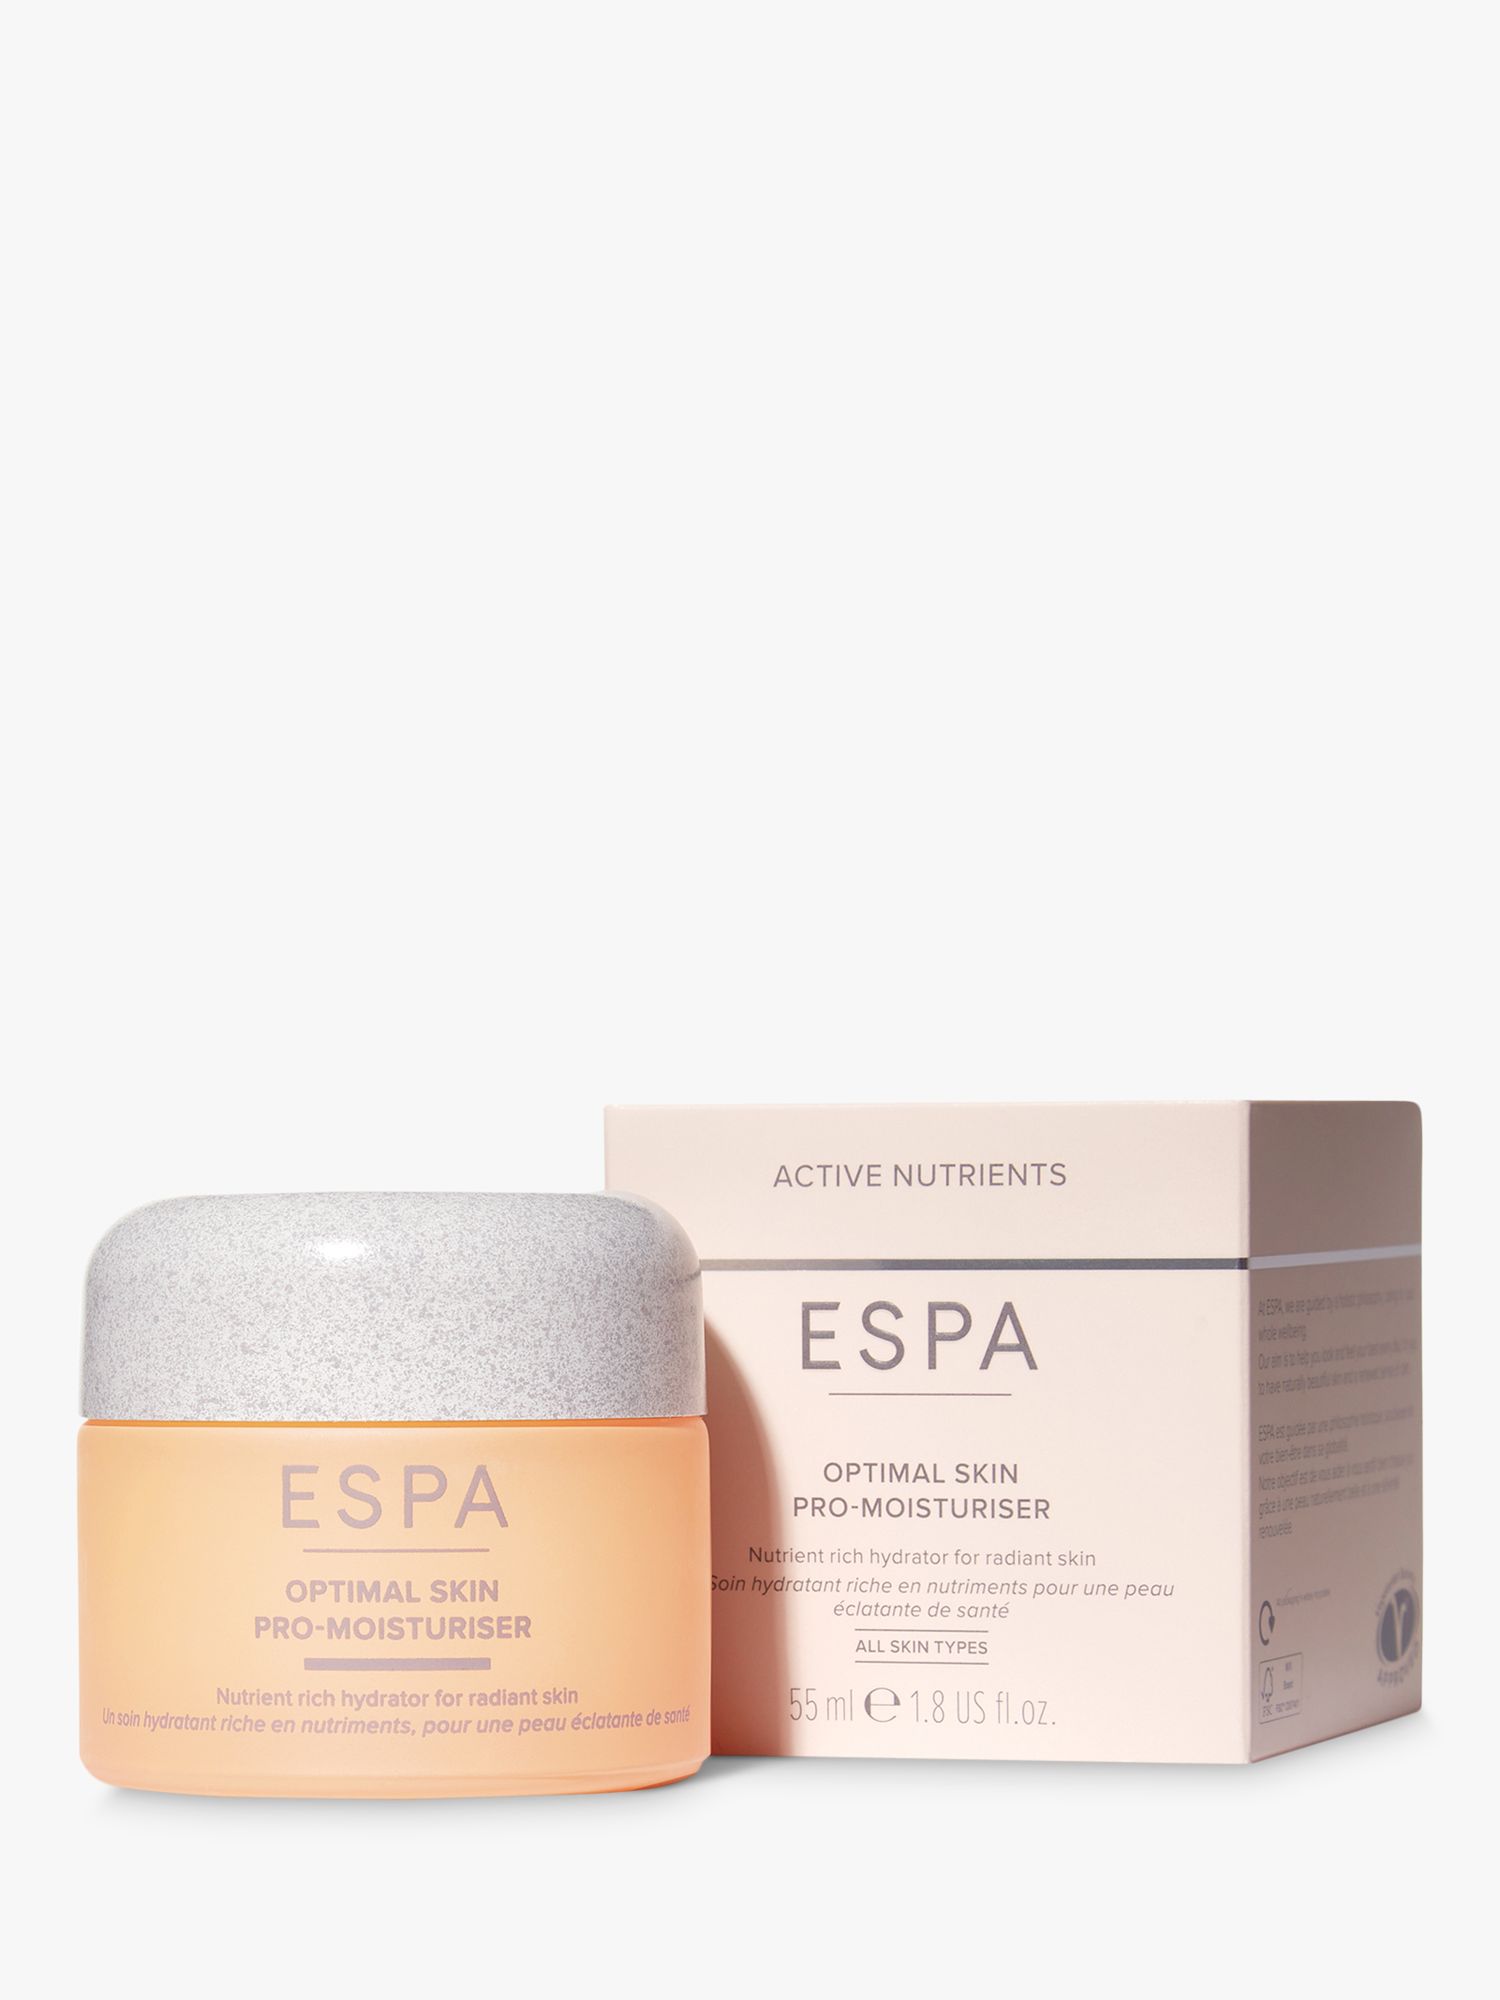 ESPA Active Nutrients Optimal Skin Pro-Moisturiser, 55ml 2